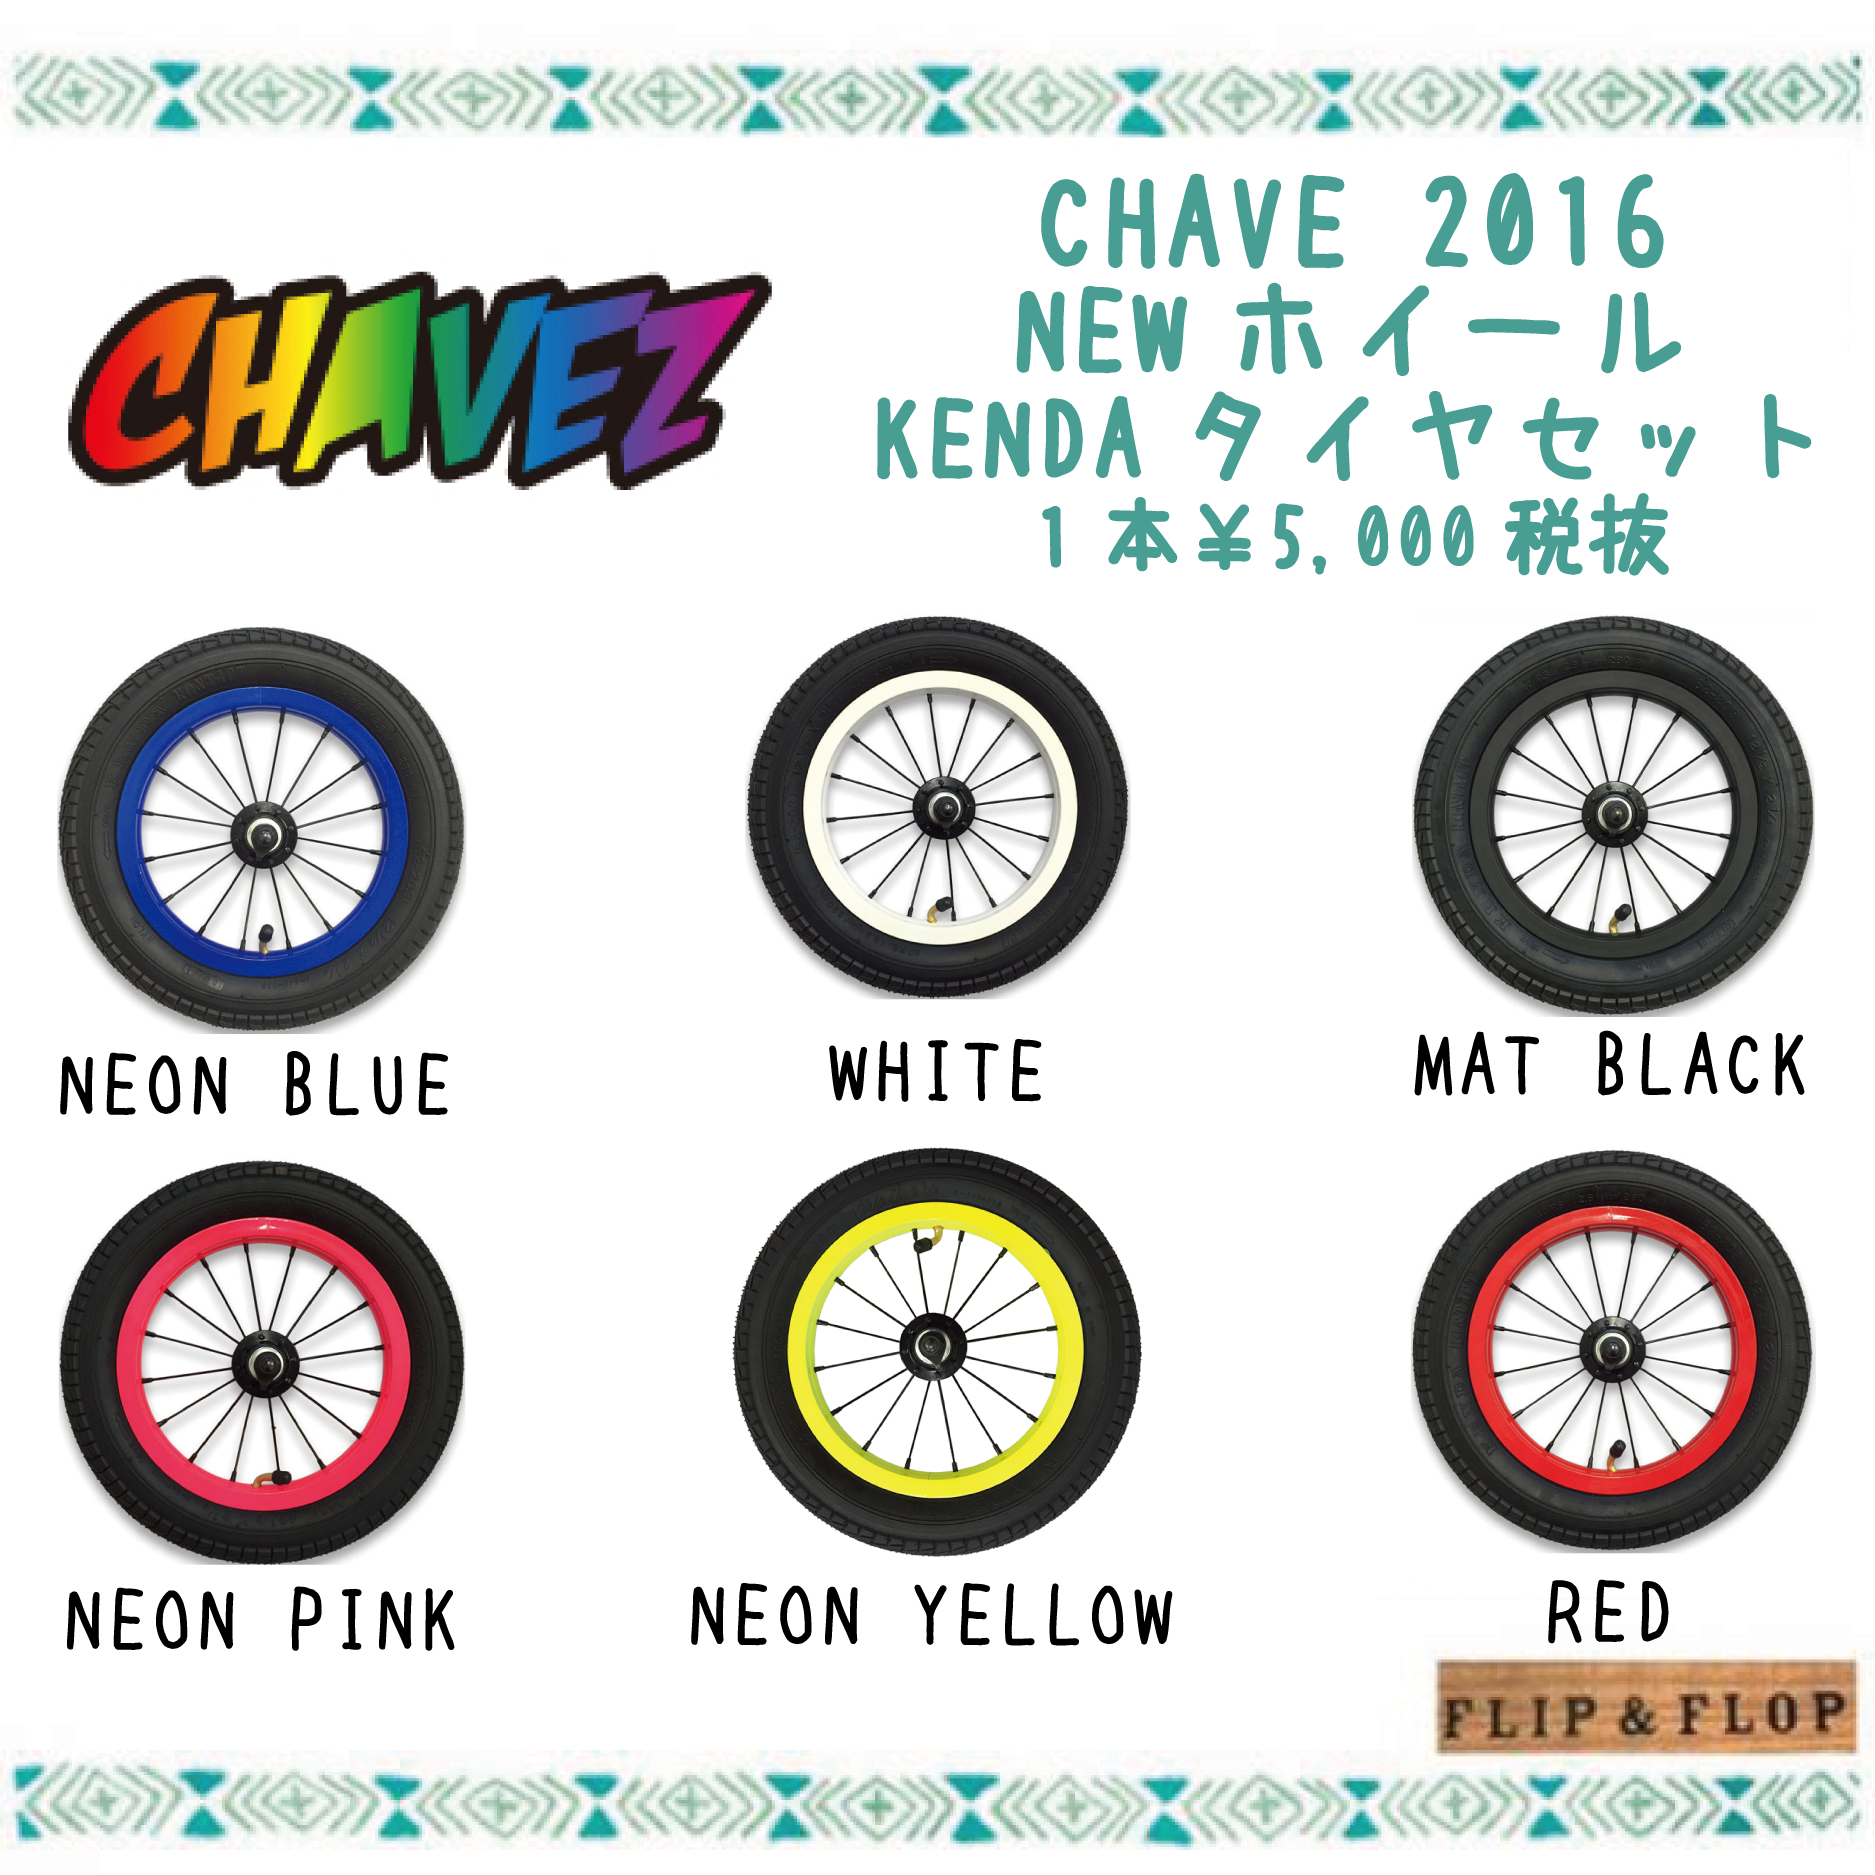 CHAVEZ KENDAタイヤセット20162